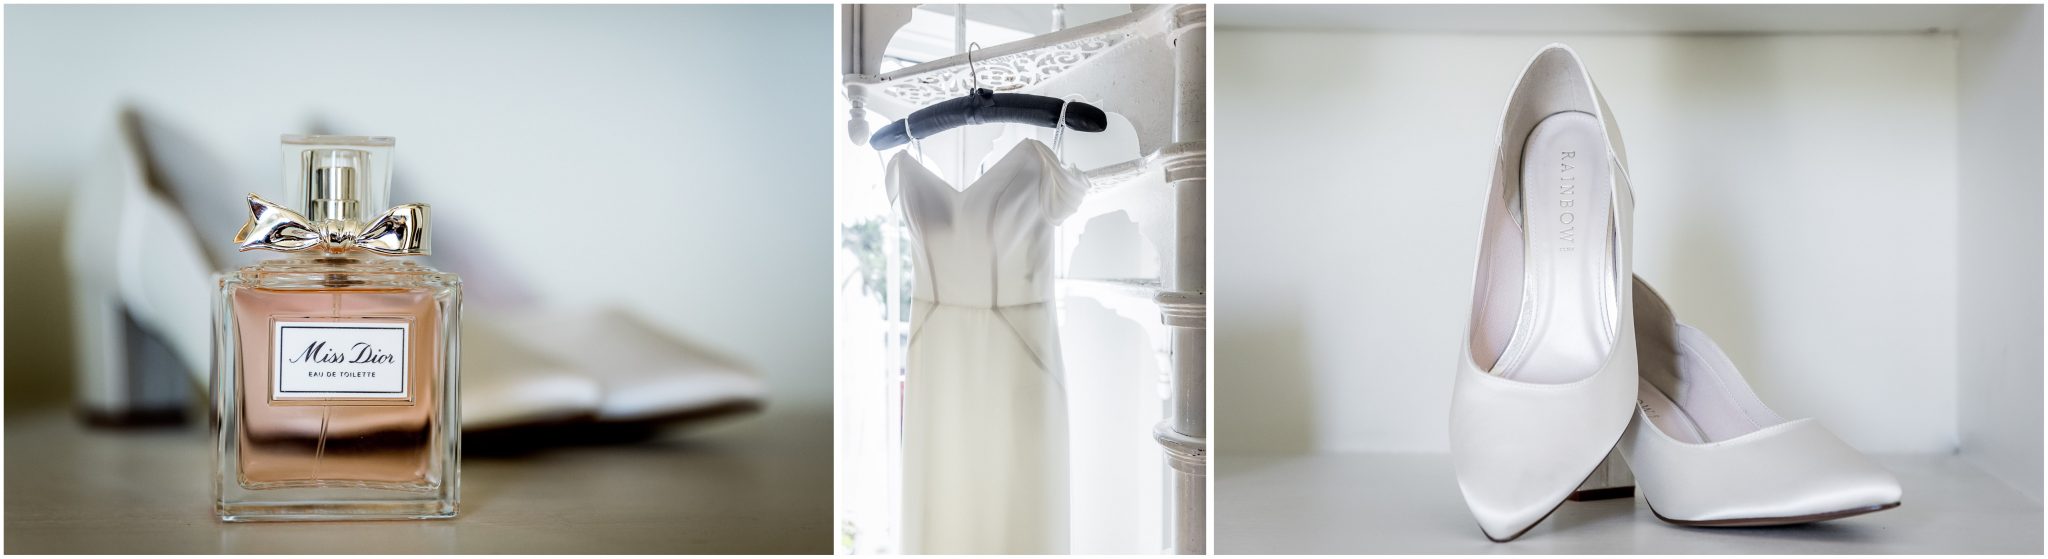 Perfume, wedding dress and shoe detail photographs